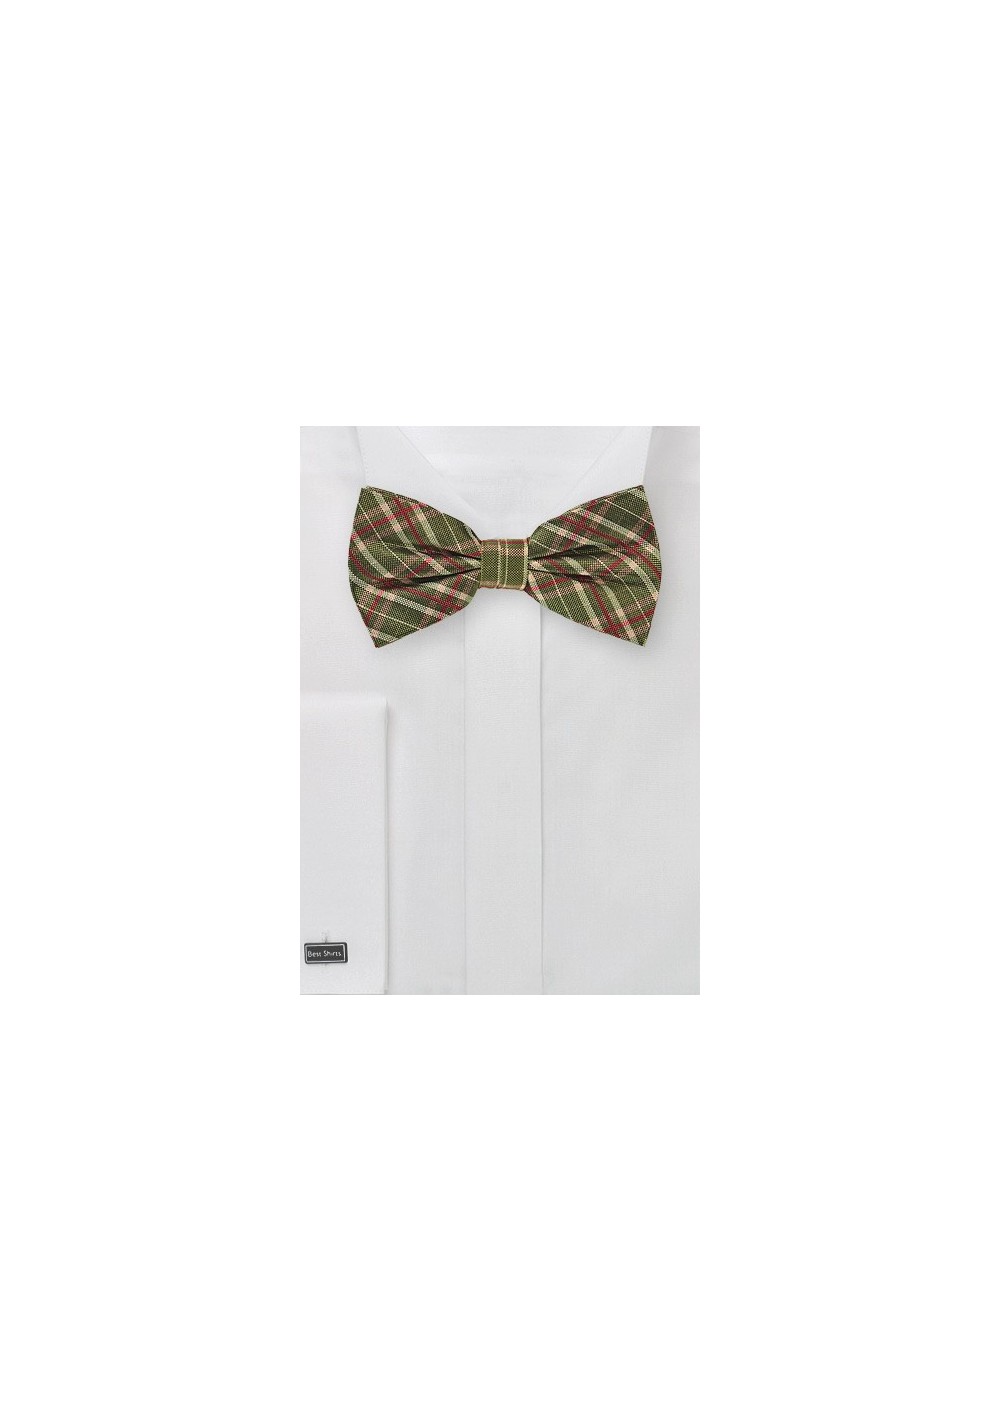 Tartan Plaid Bow Tie in Olive Green